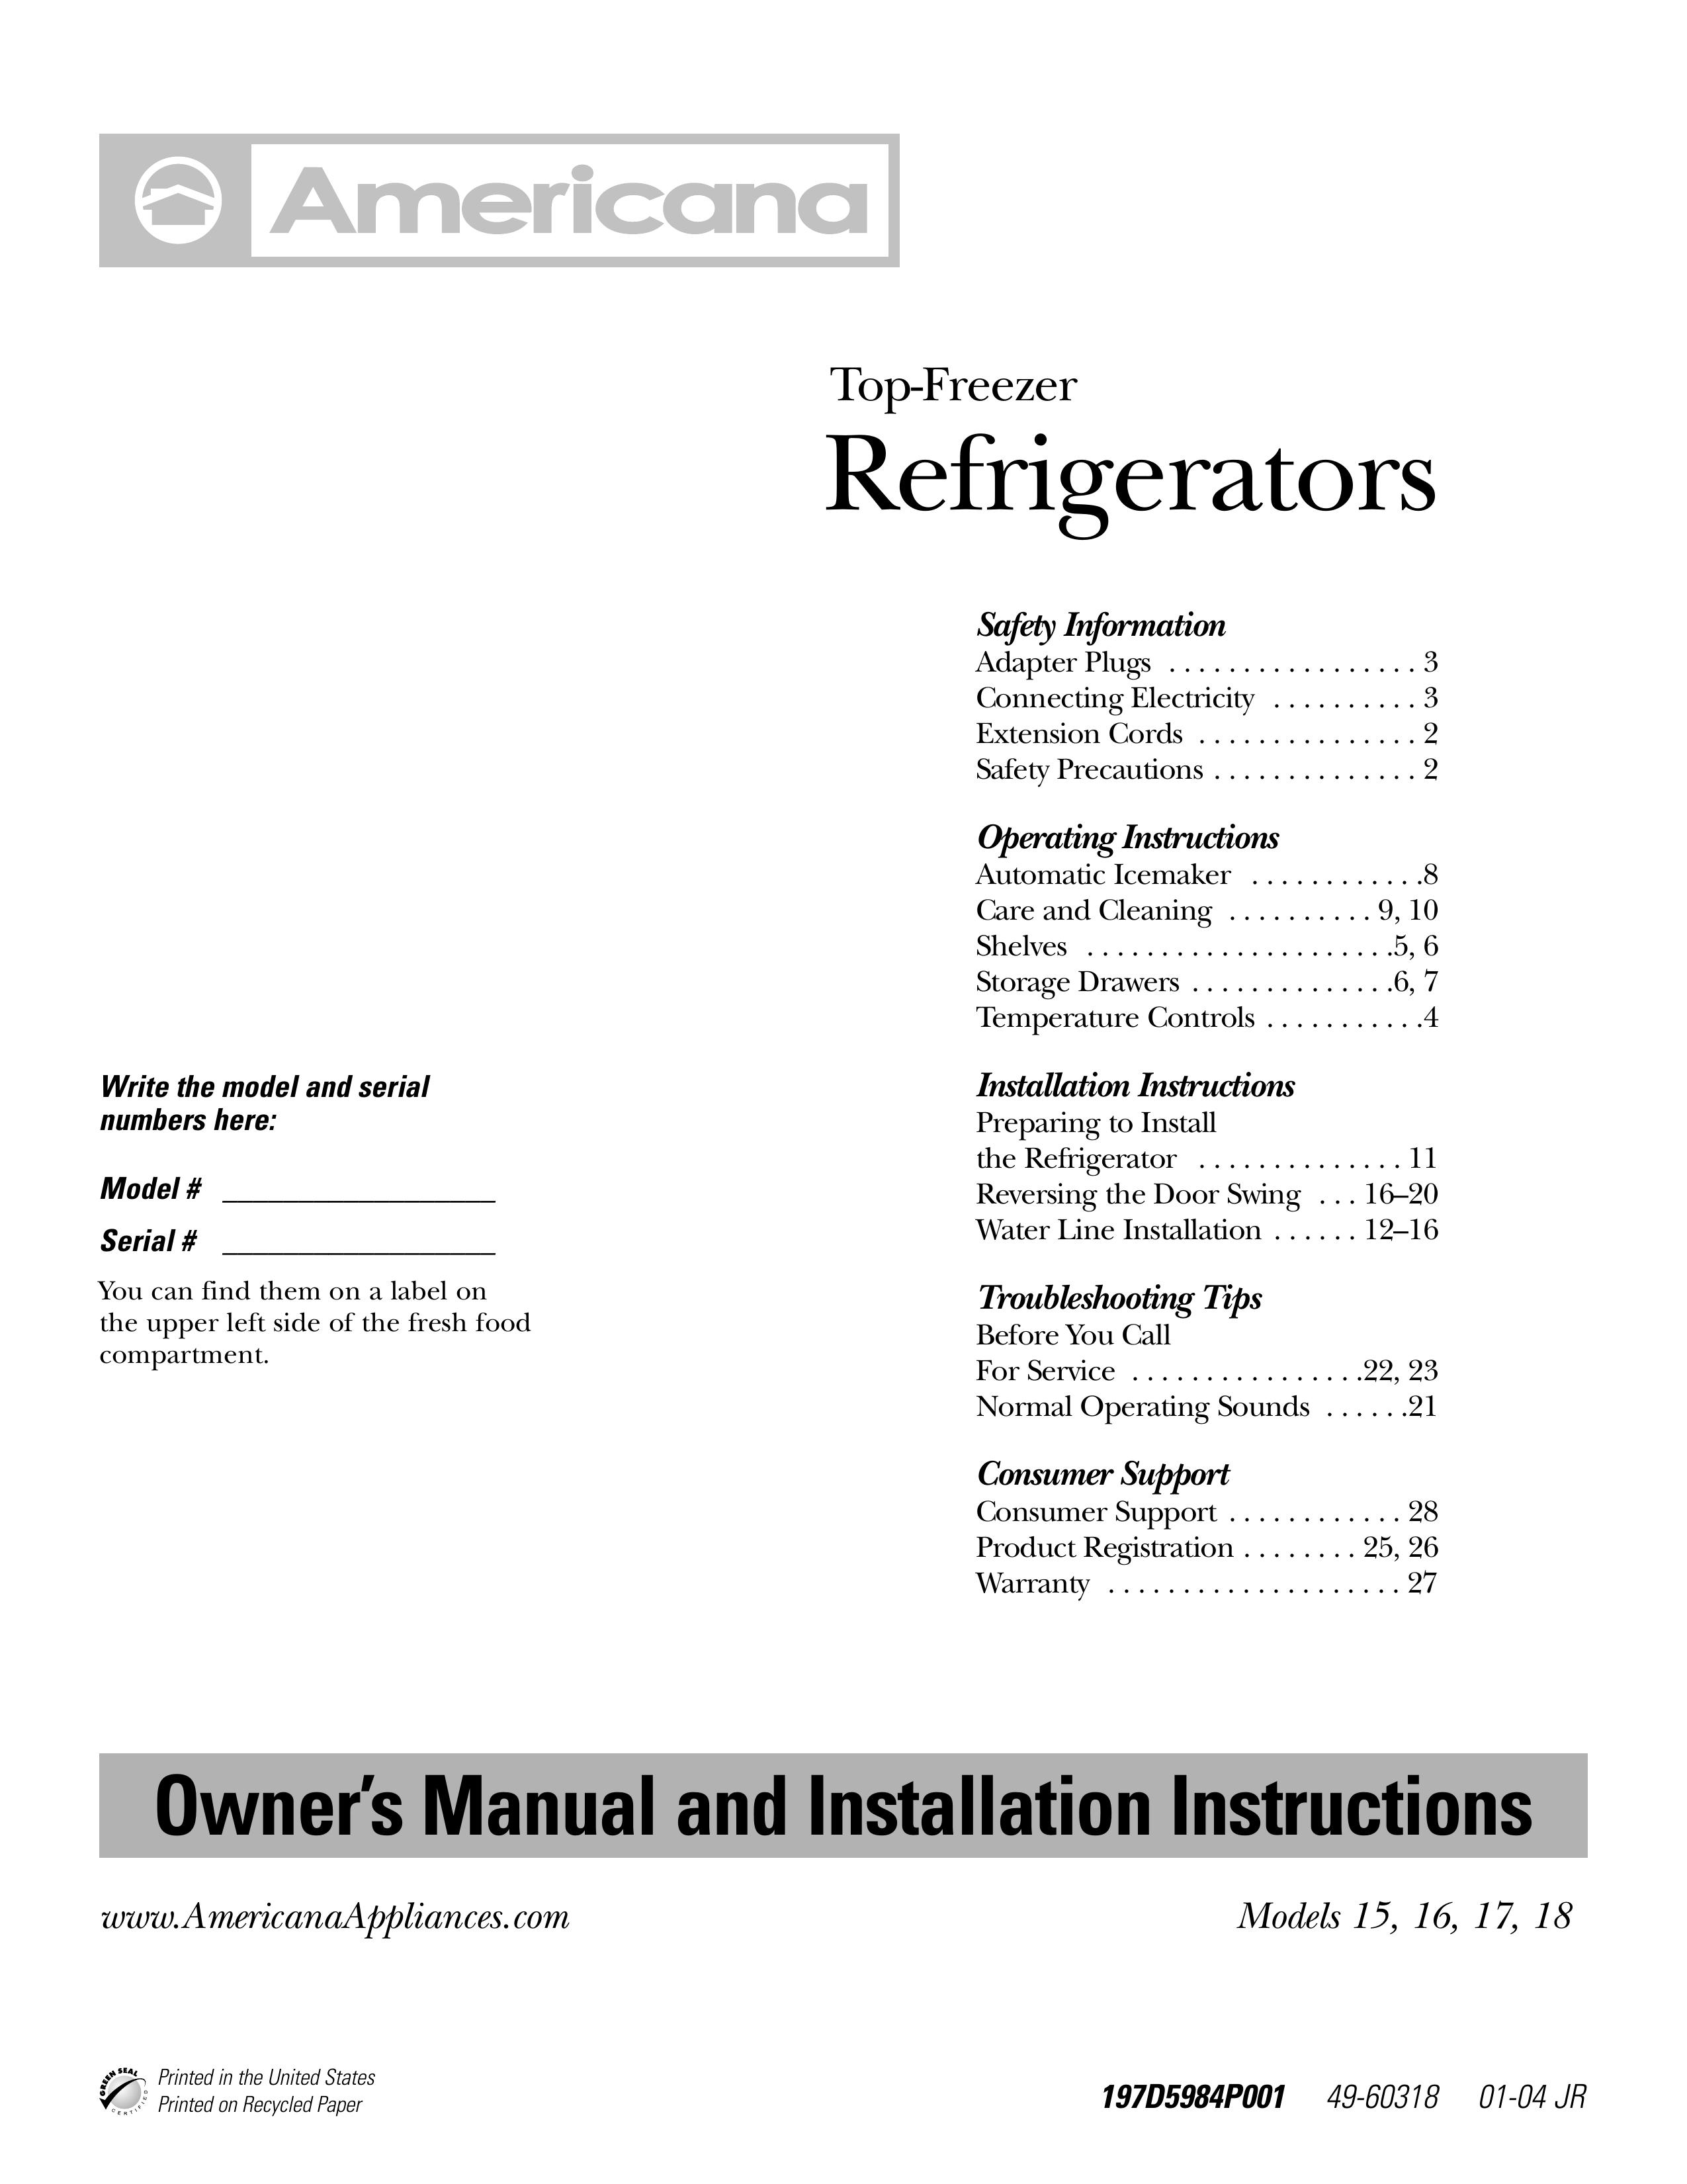 Americana Appliances 15 Refrigerator User Manual